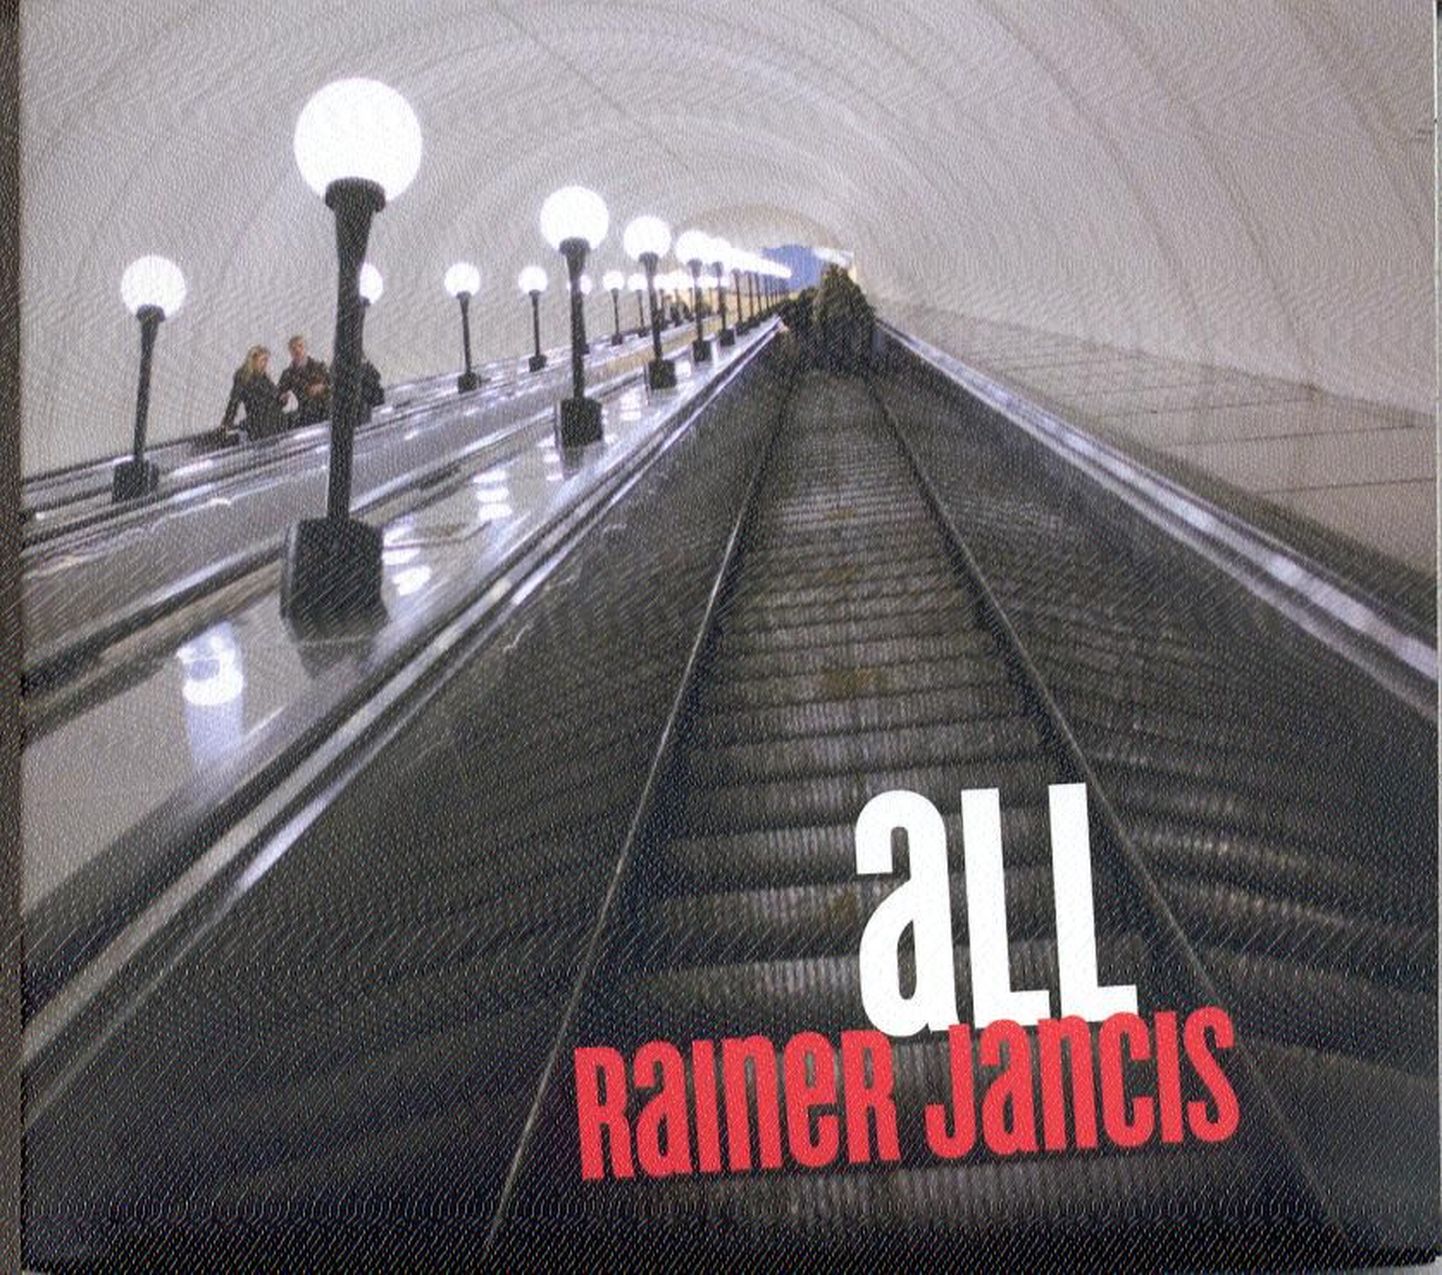 Rainer Jancis “All”.